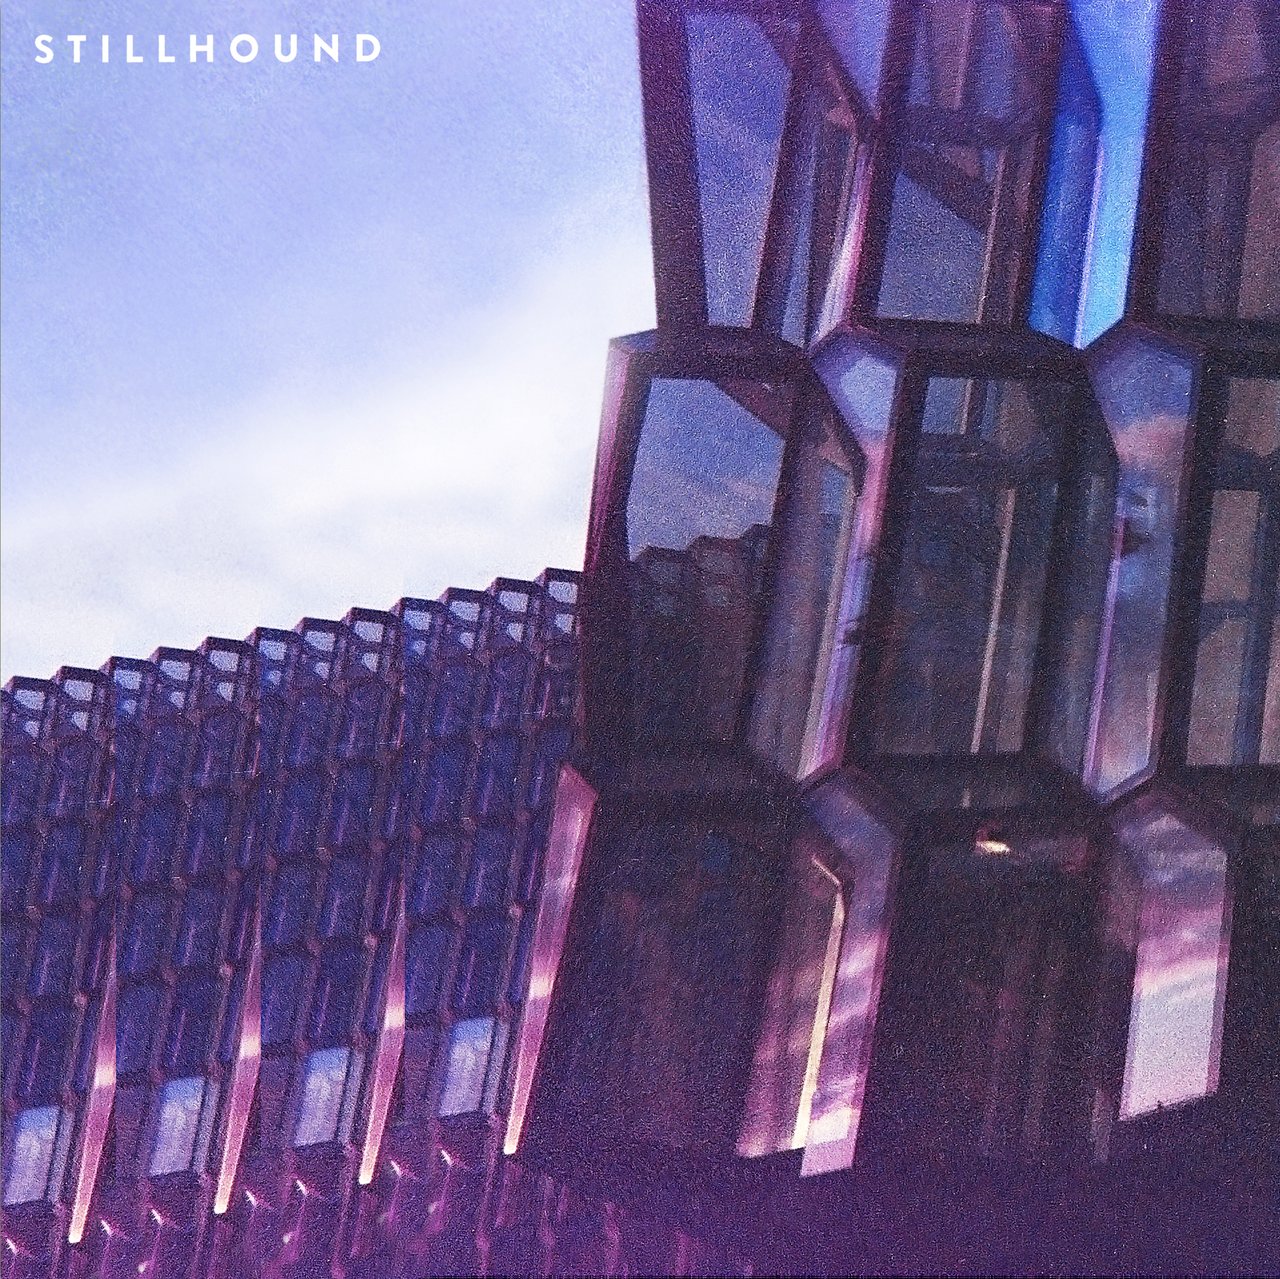 Bandcamp link for Stillhound album